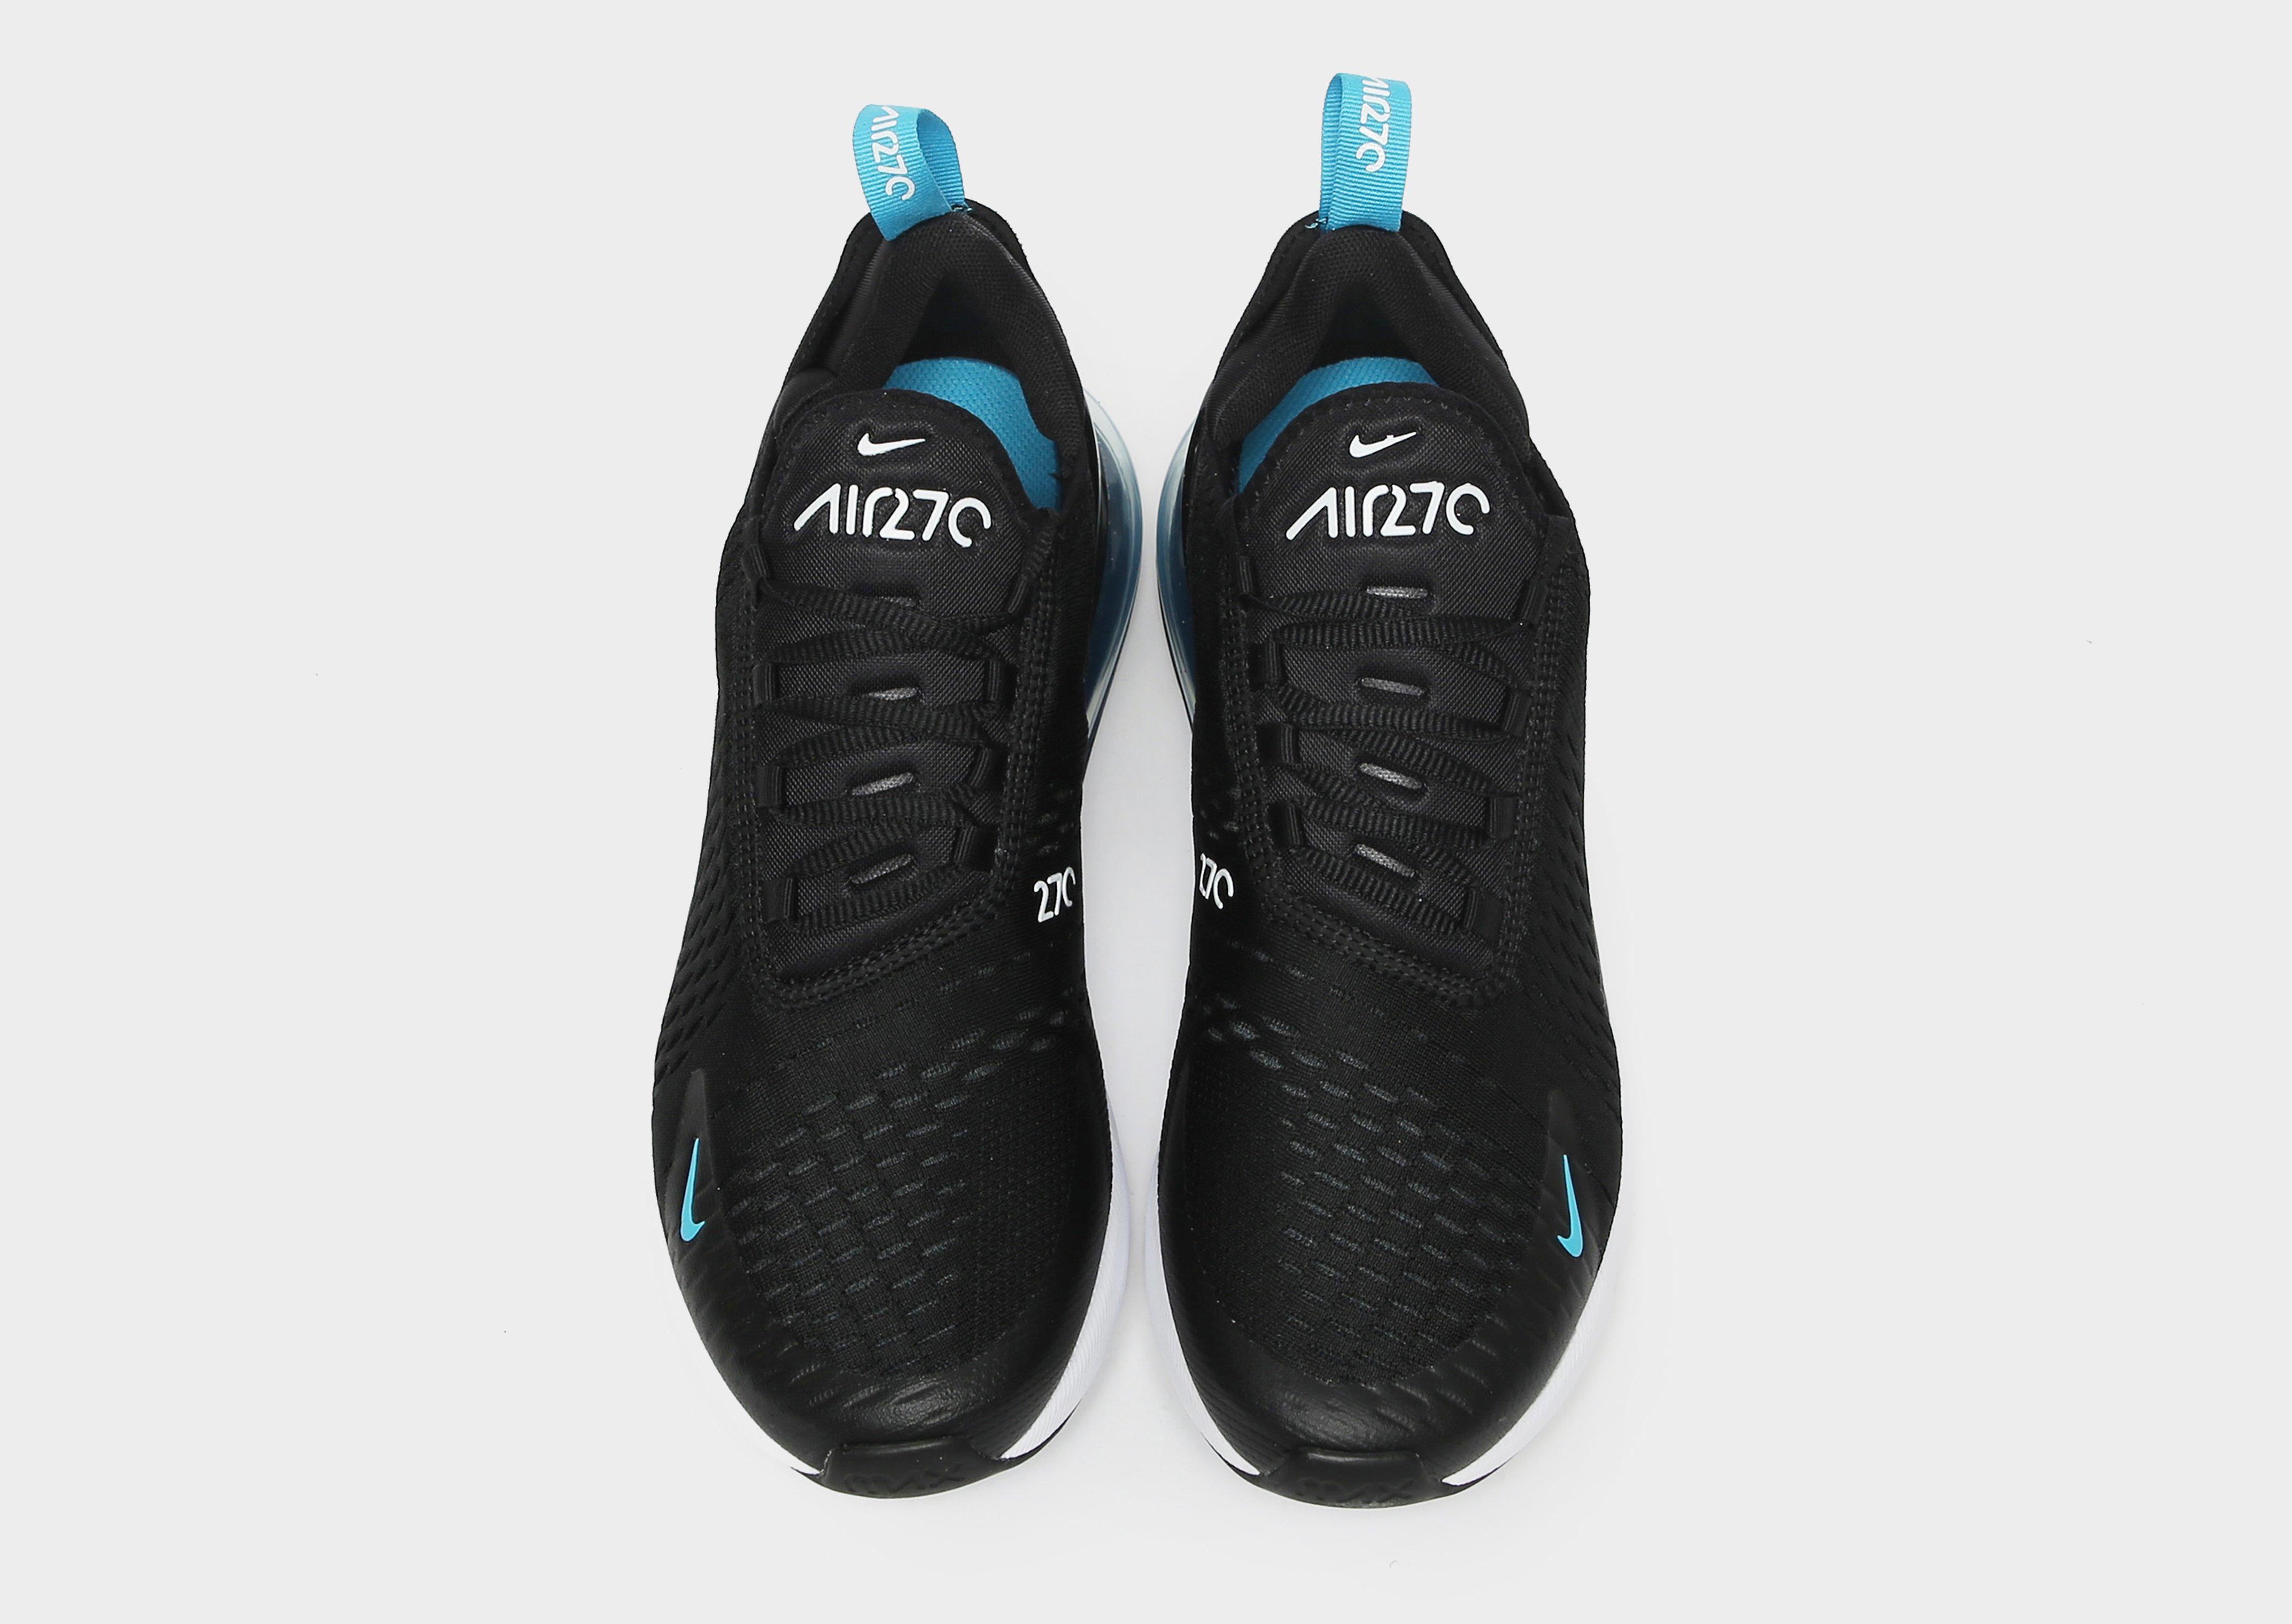 enviar estilo Molesto Nike Air Max 270 en Negro | JD Sports España